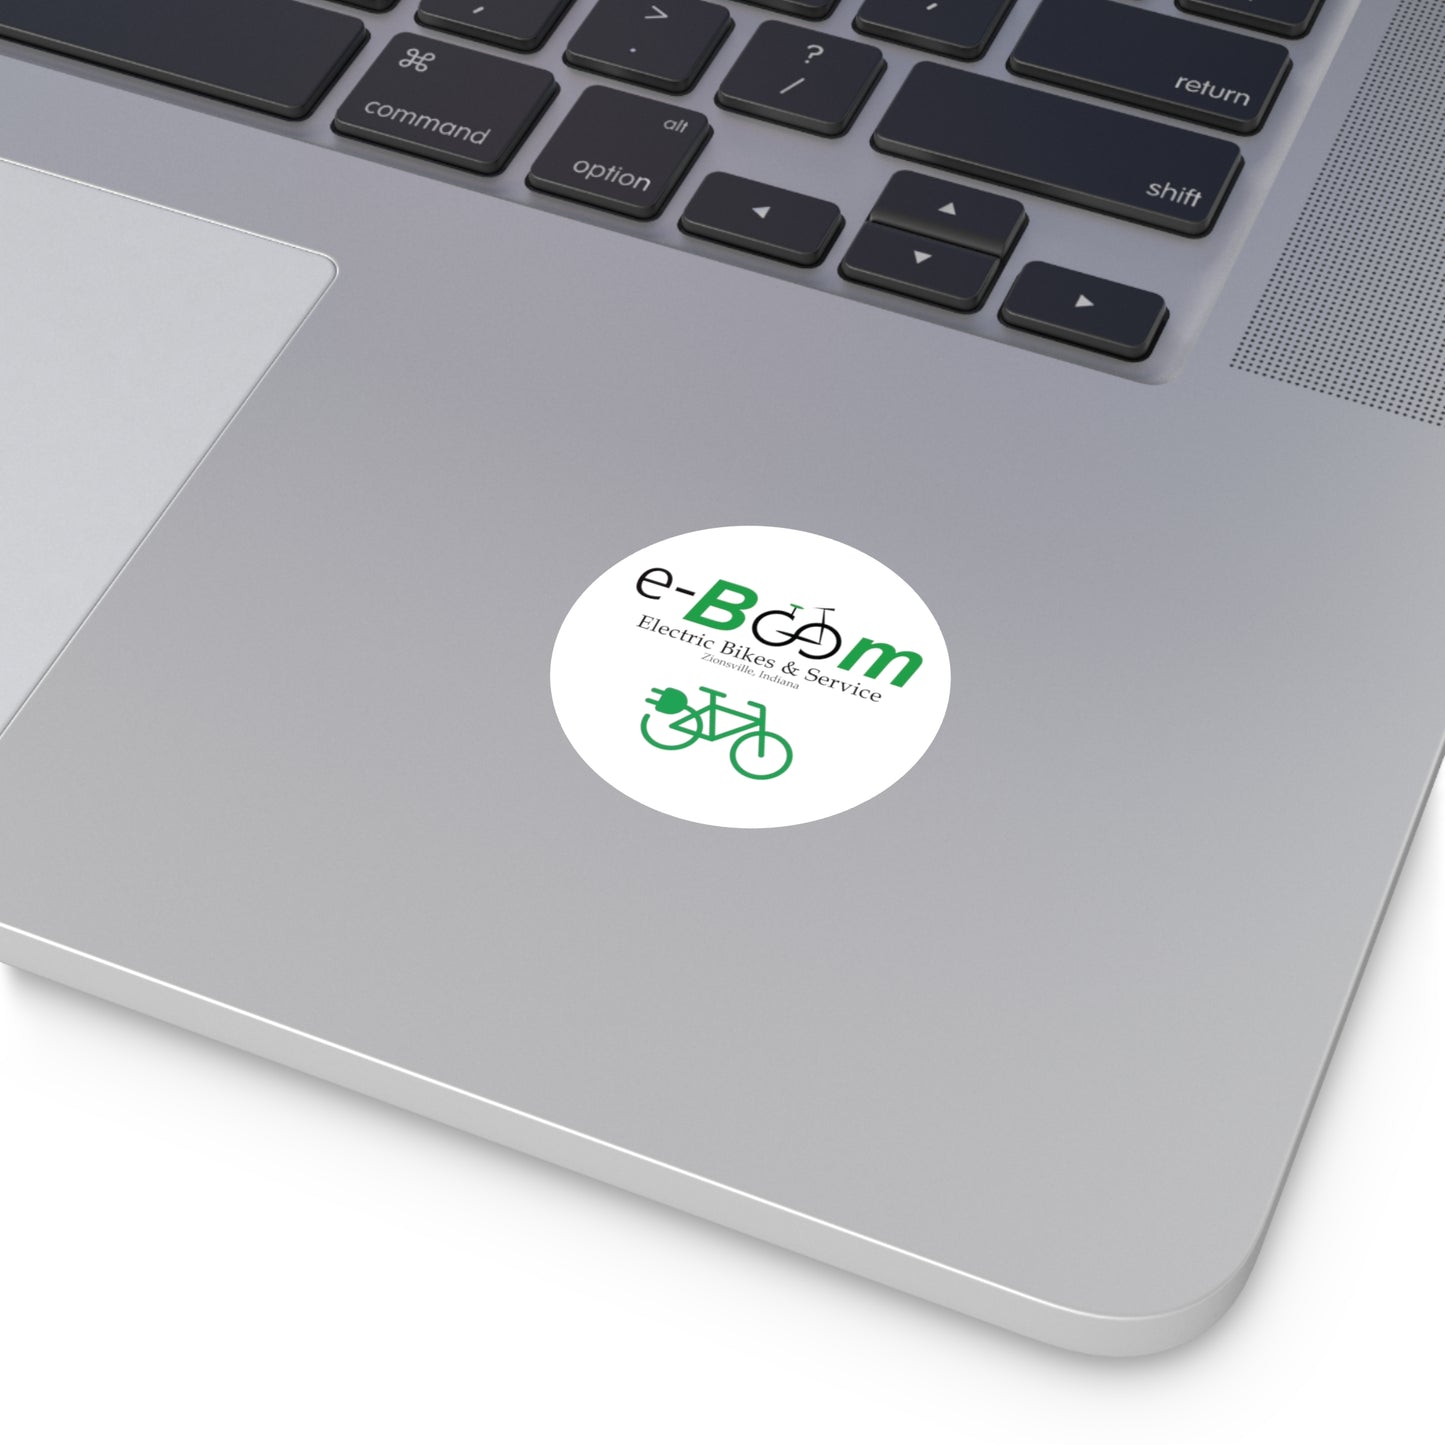 "eBoom Electric Bikes" Round Vinyl Stickers